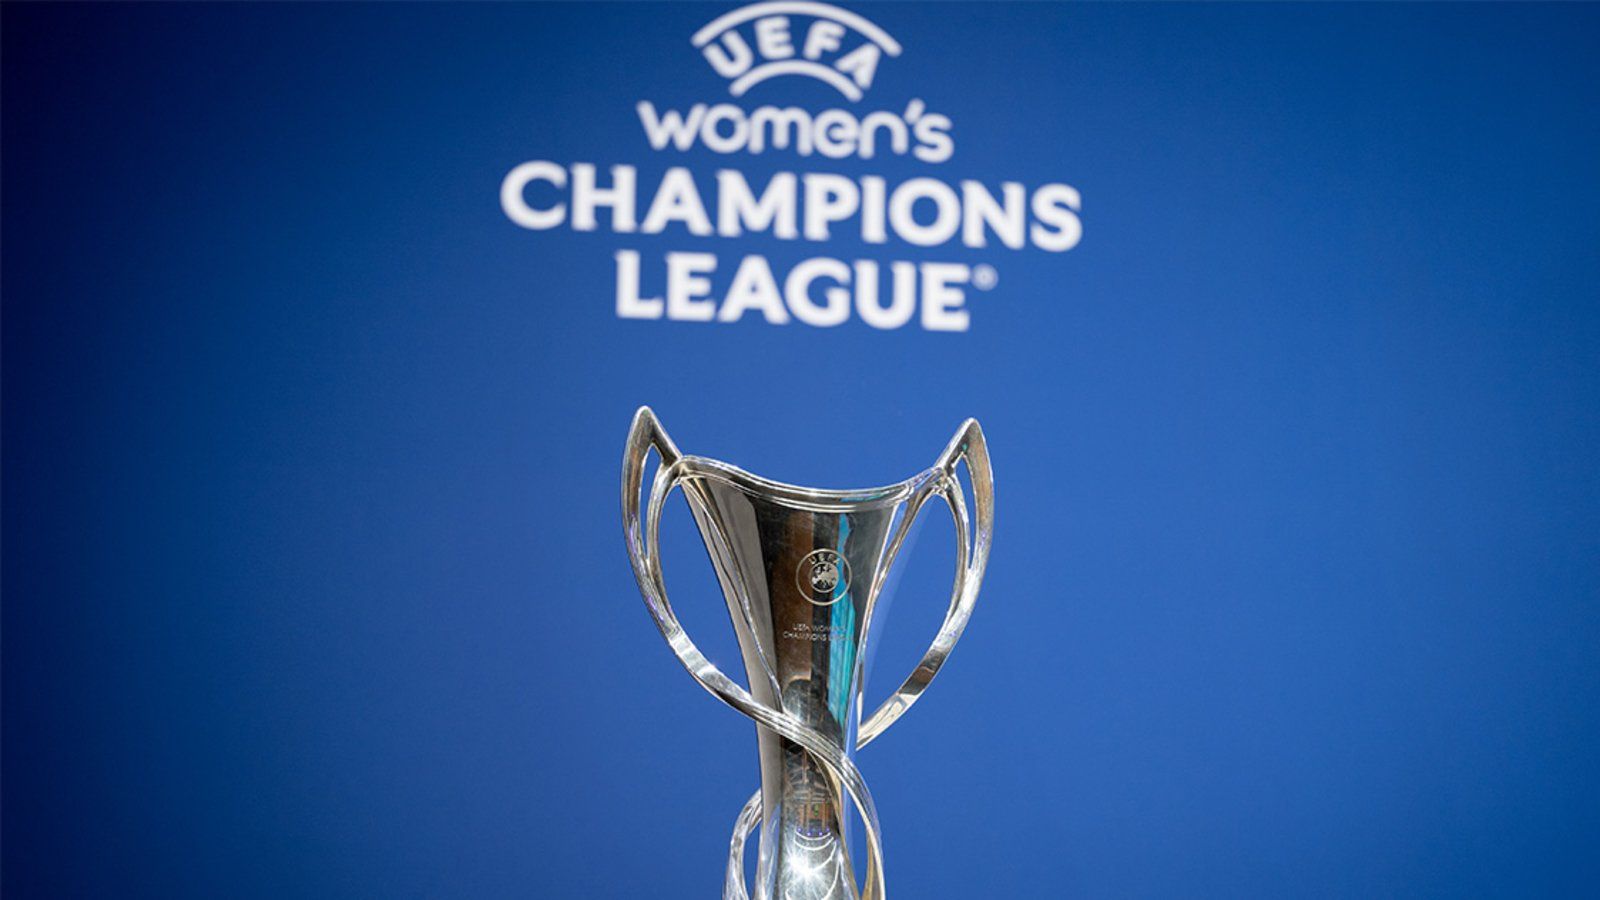 The UEFA Women's Champions League trophy, UEFA Women's Champions League